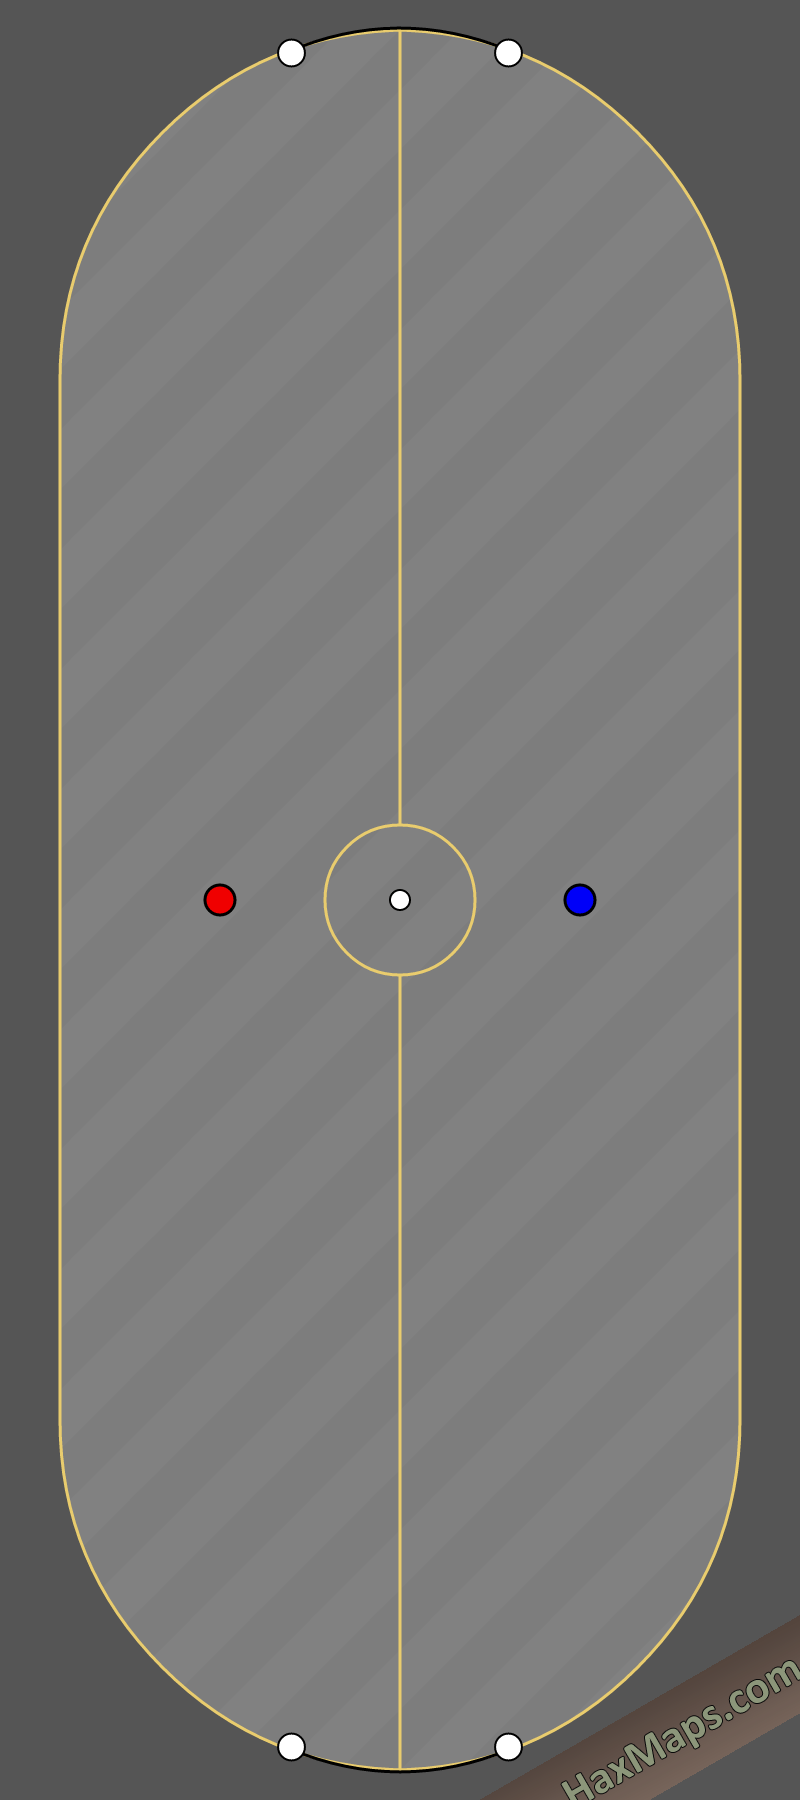 hax ball maps | HockeyR2 3Vs3